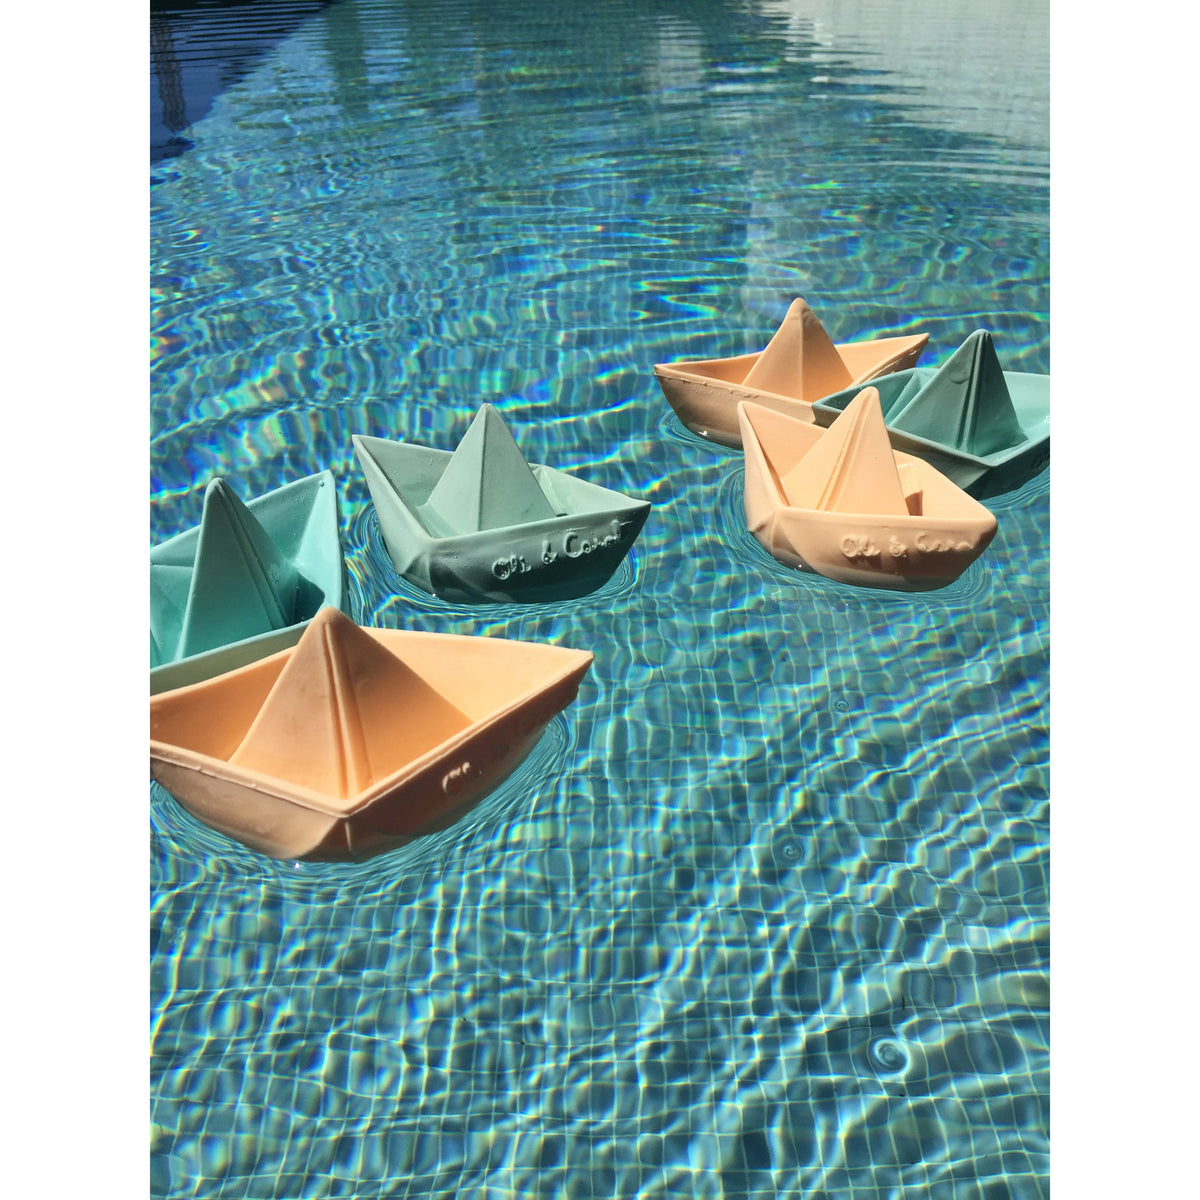 oli-&amp;-carol-origami-boat-mint-teether- (4)